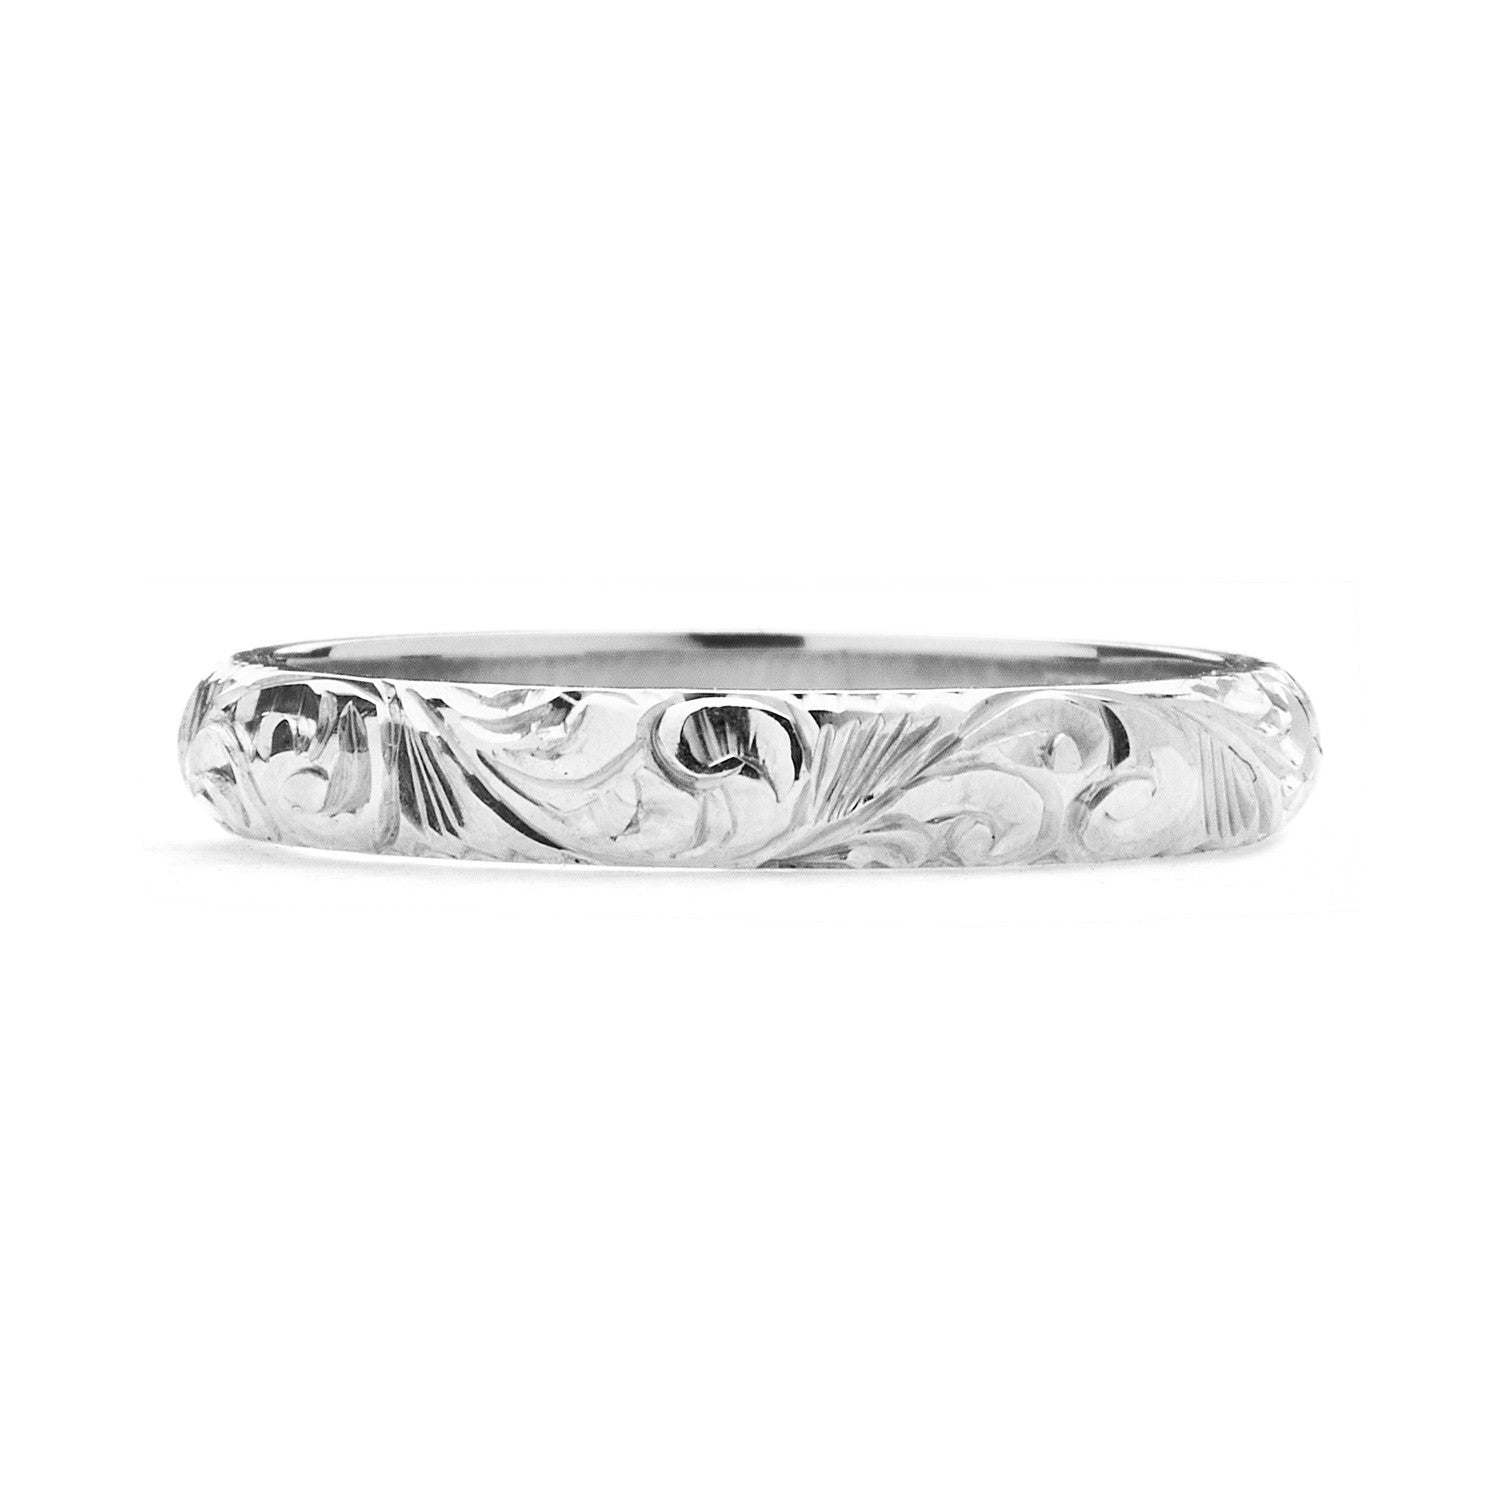 D shaped platinum wedding rings